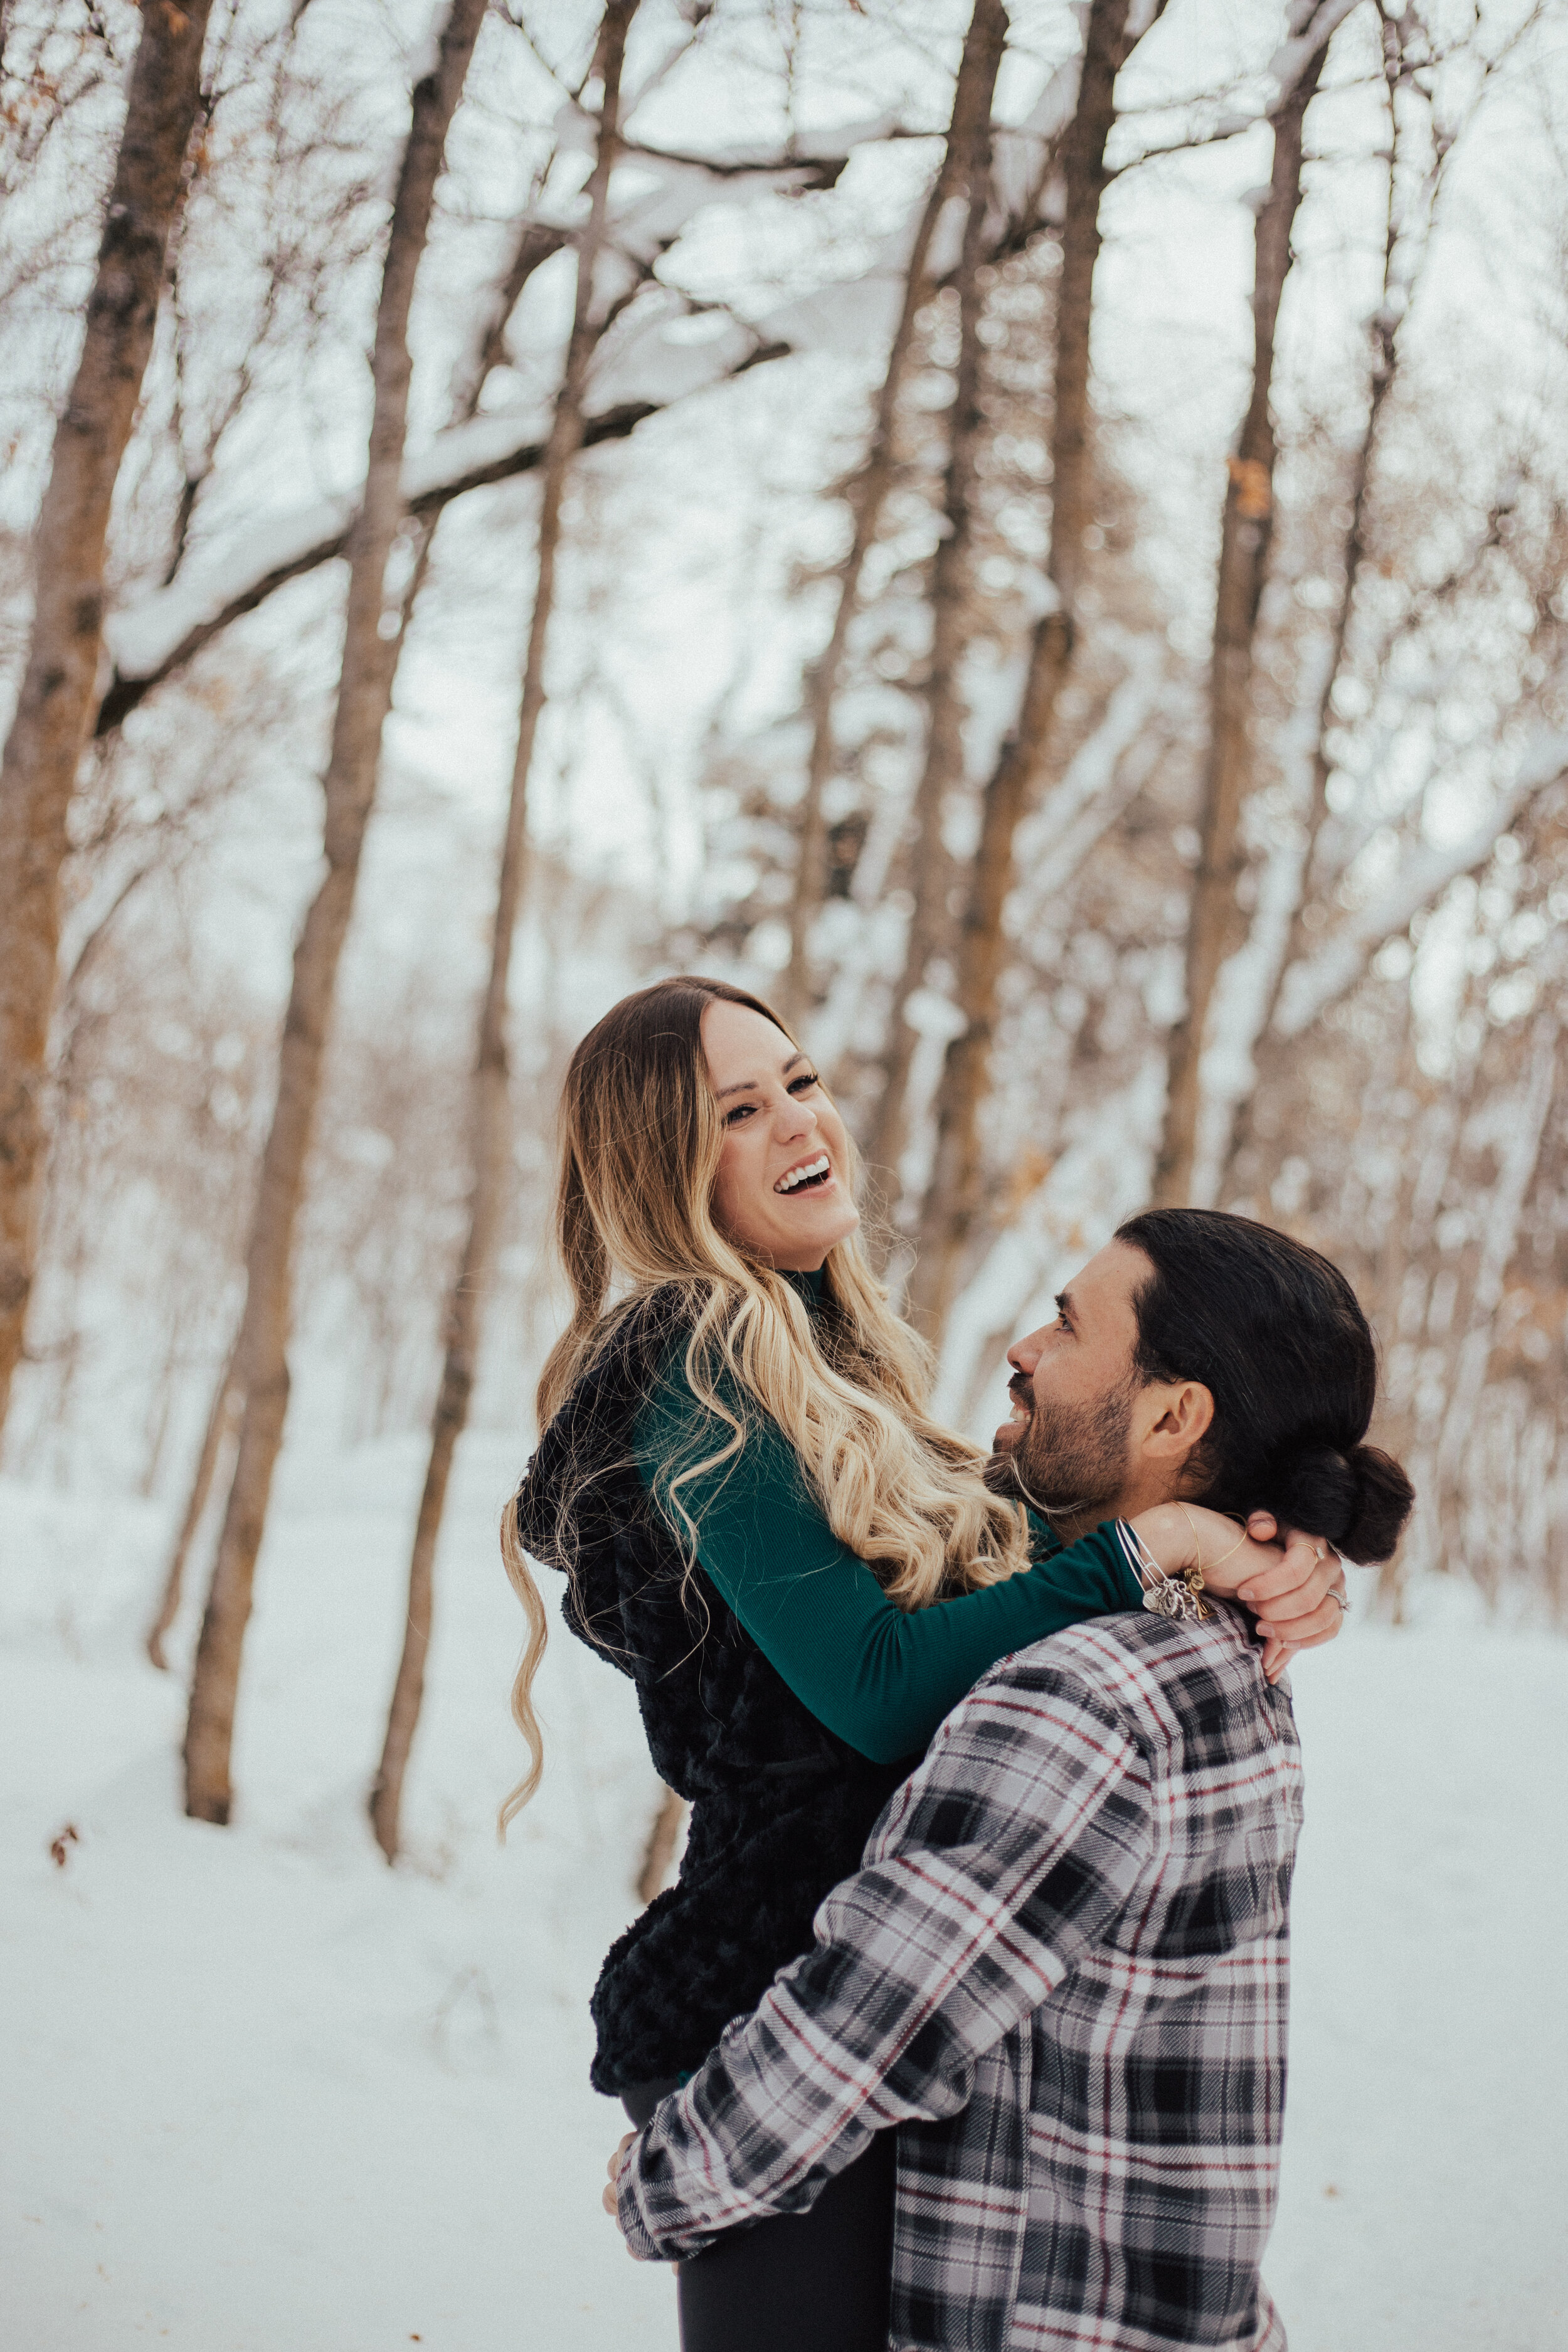 Snowy winter mountain couple laughing anniversary shoot engagement session romantic playful happy #utahphotographer #weddingphotographer #engagements #coupleshoot #engagementsession